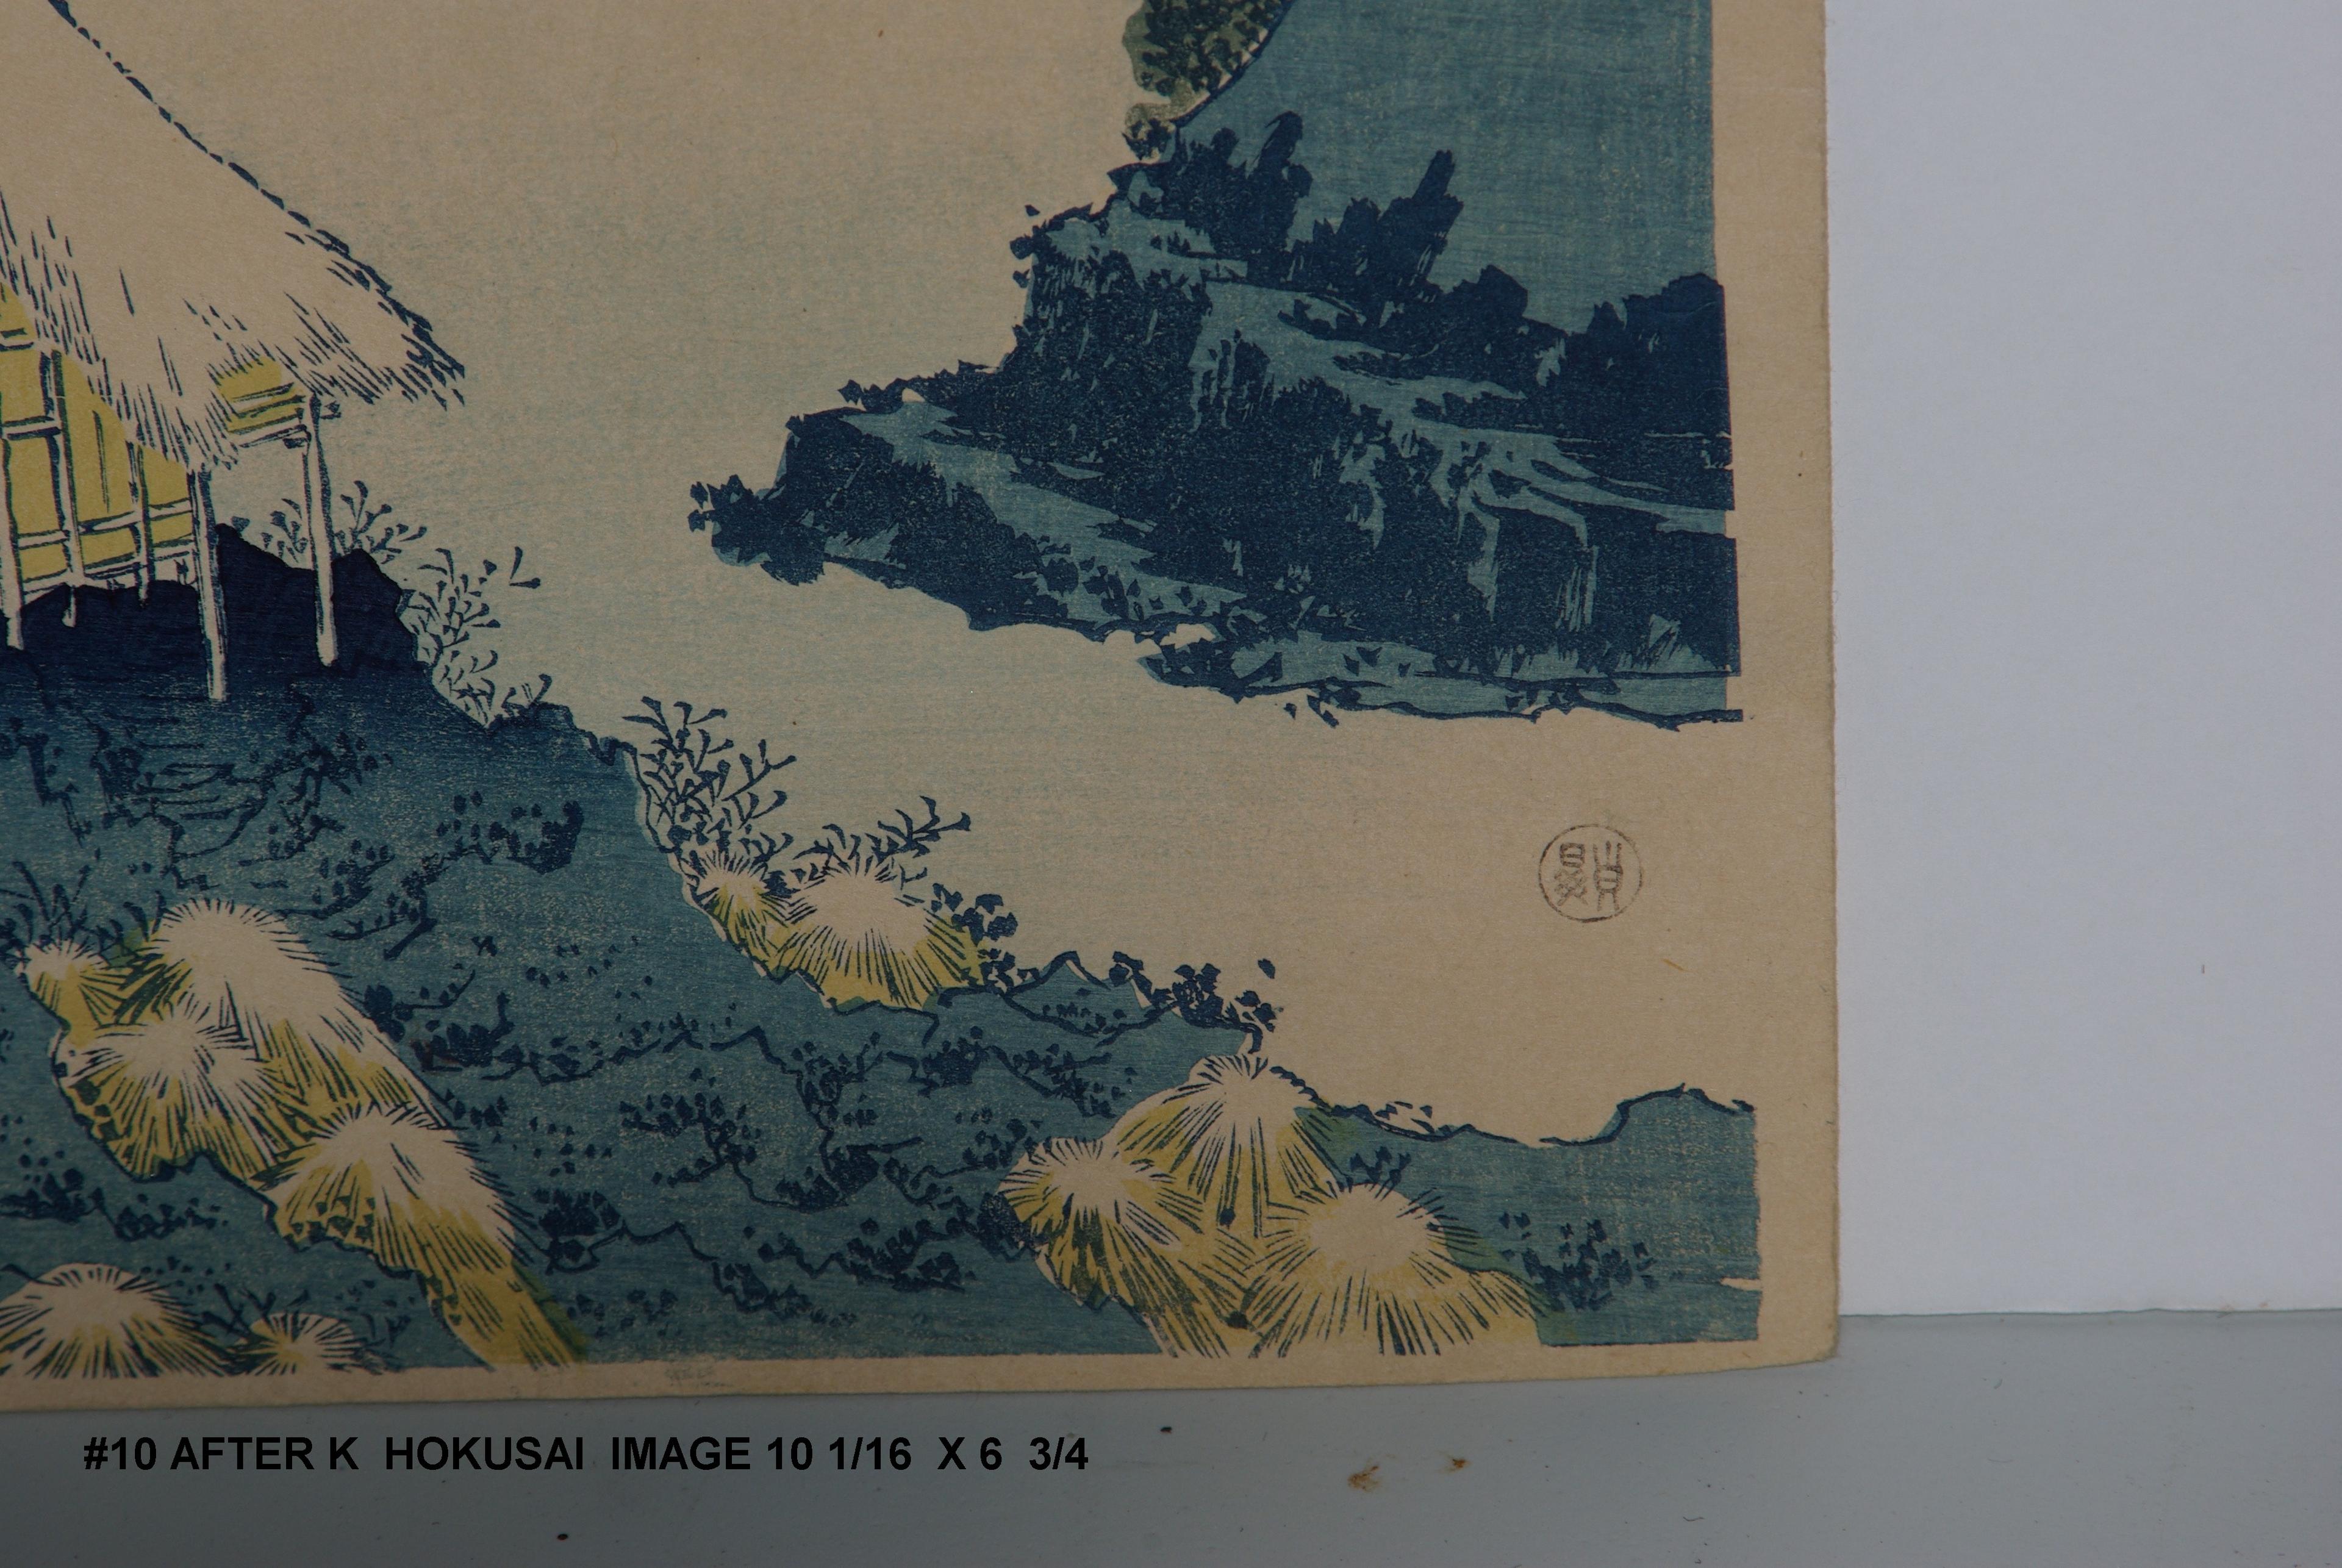 After Katsushika Hokusai: Fuji from Lake Suaw in Shinano Province